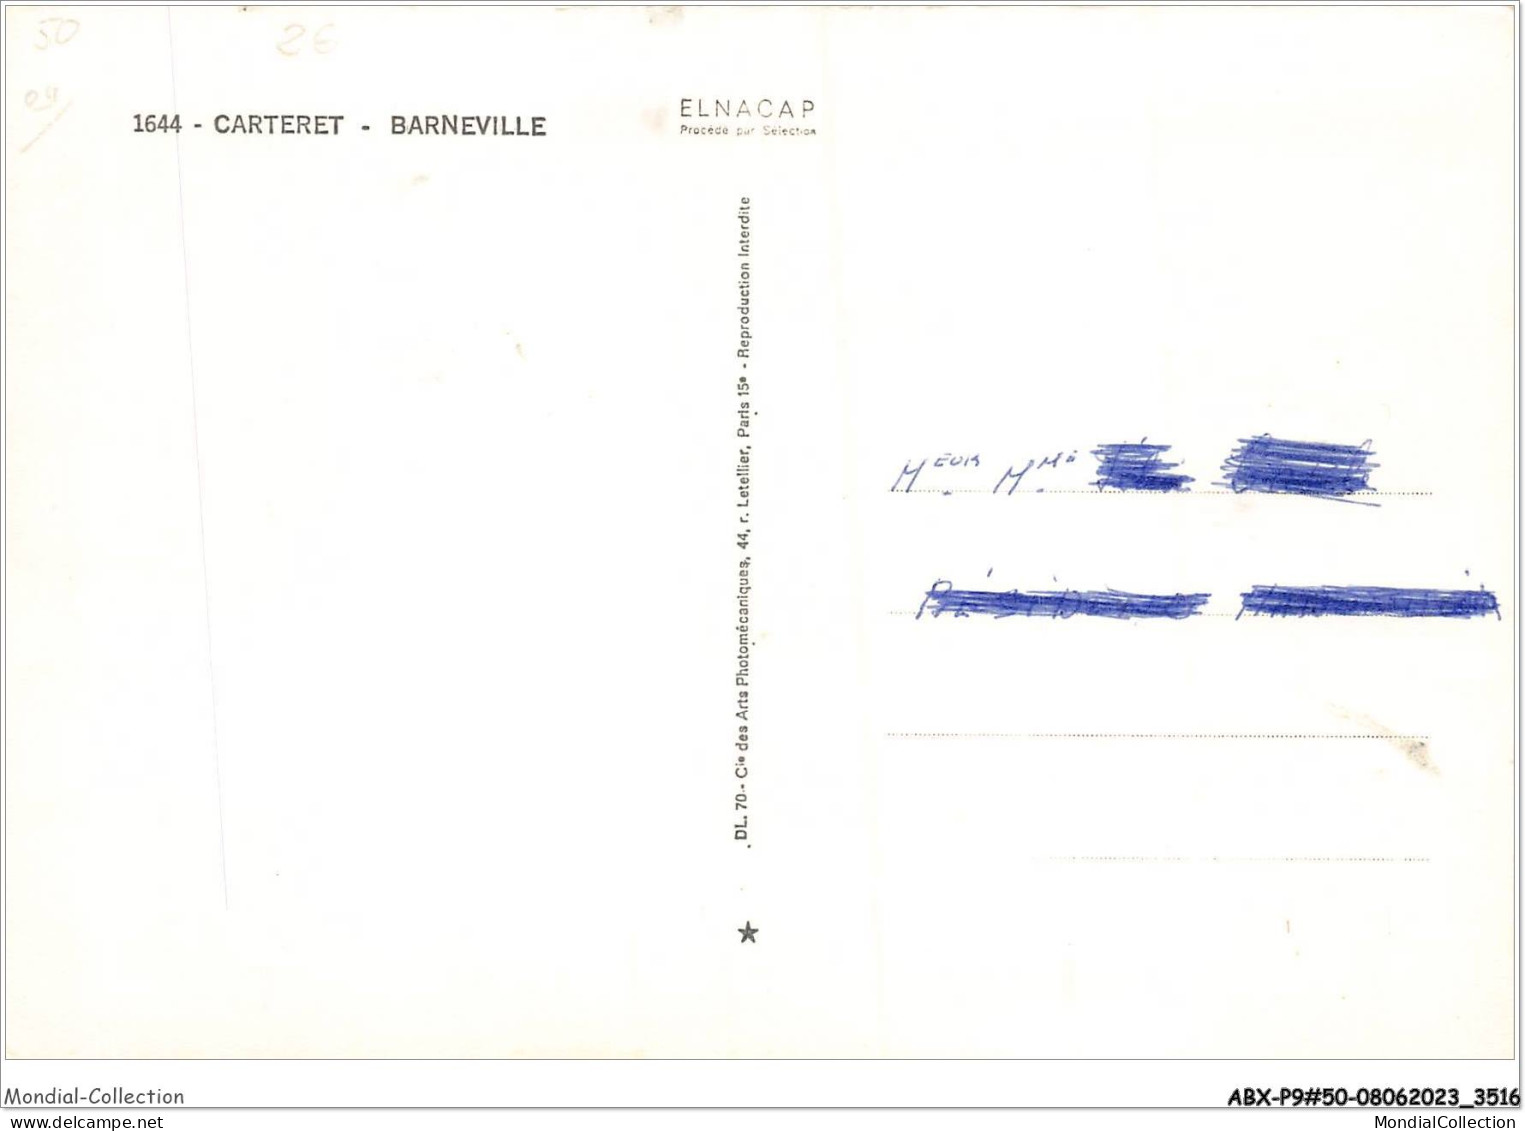 ABXP9-50-0751 - CARTERET - BARNEVILLE - Carteret